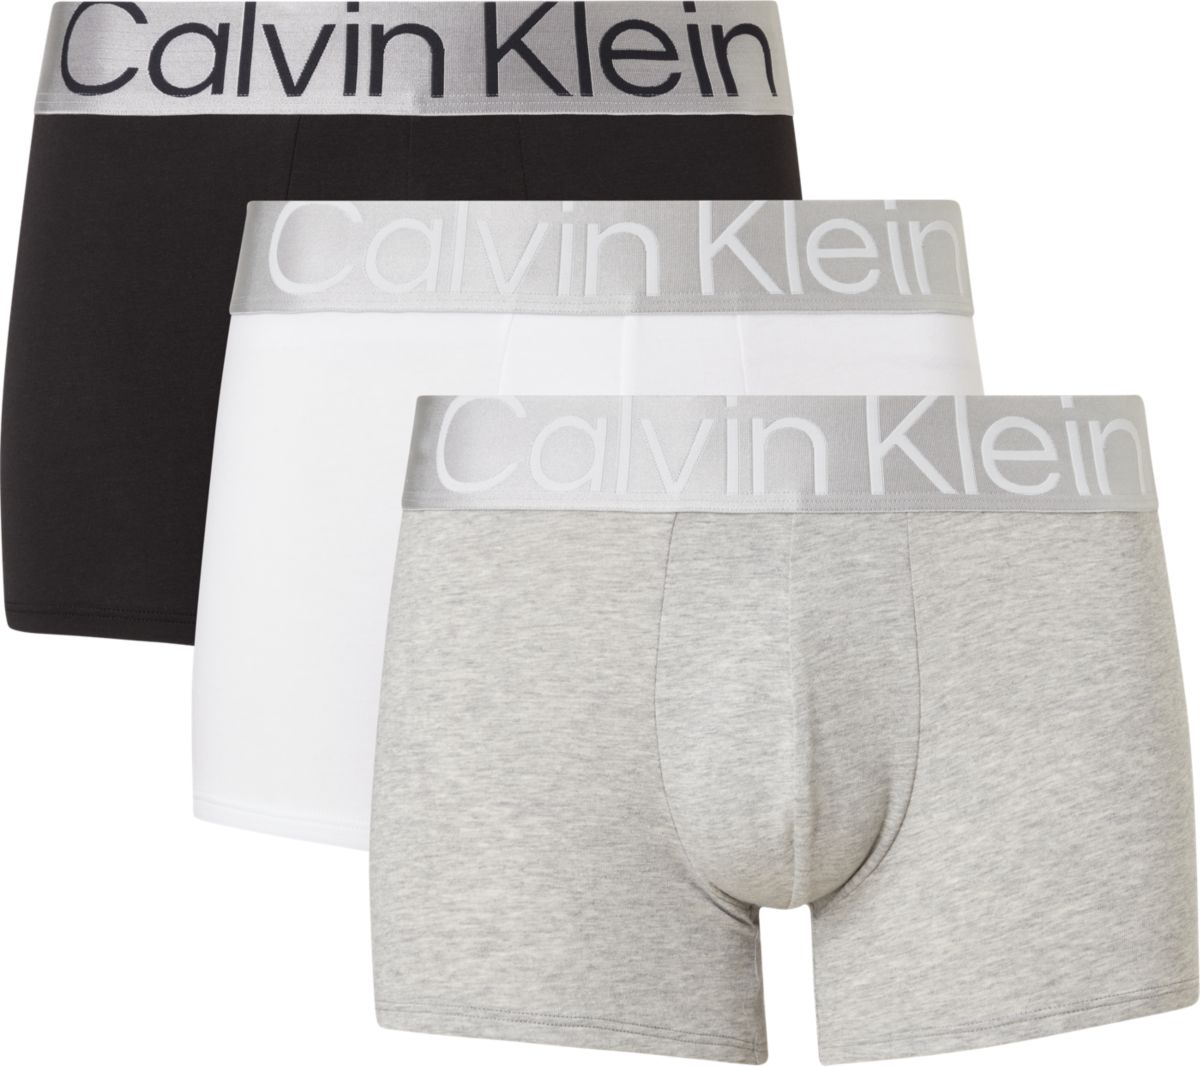 Calvin Klein Trunk 3-pack CK all over NB3130 MP1 White/black/grey